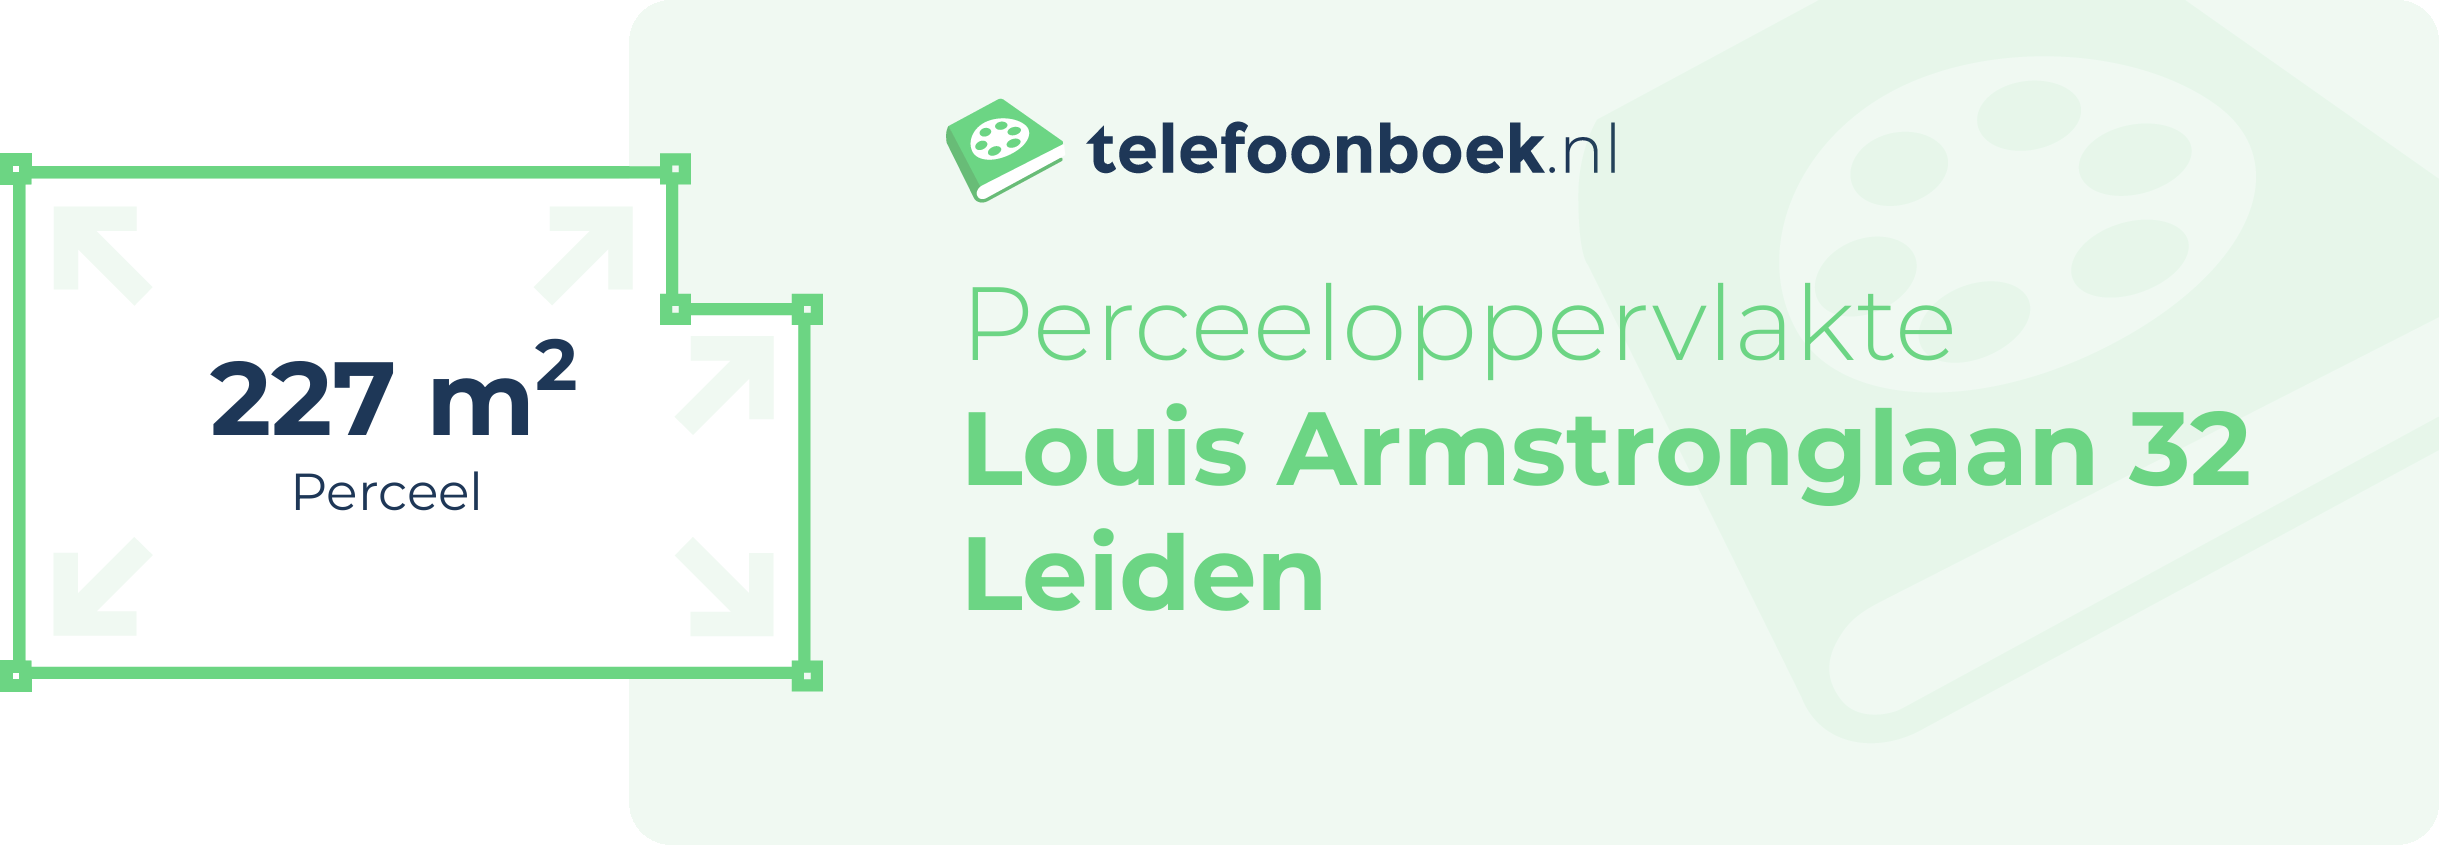 Perceeloppervlakte Louis Armstronglaan 32 Leiden